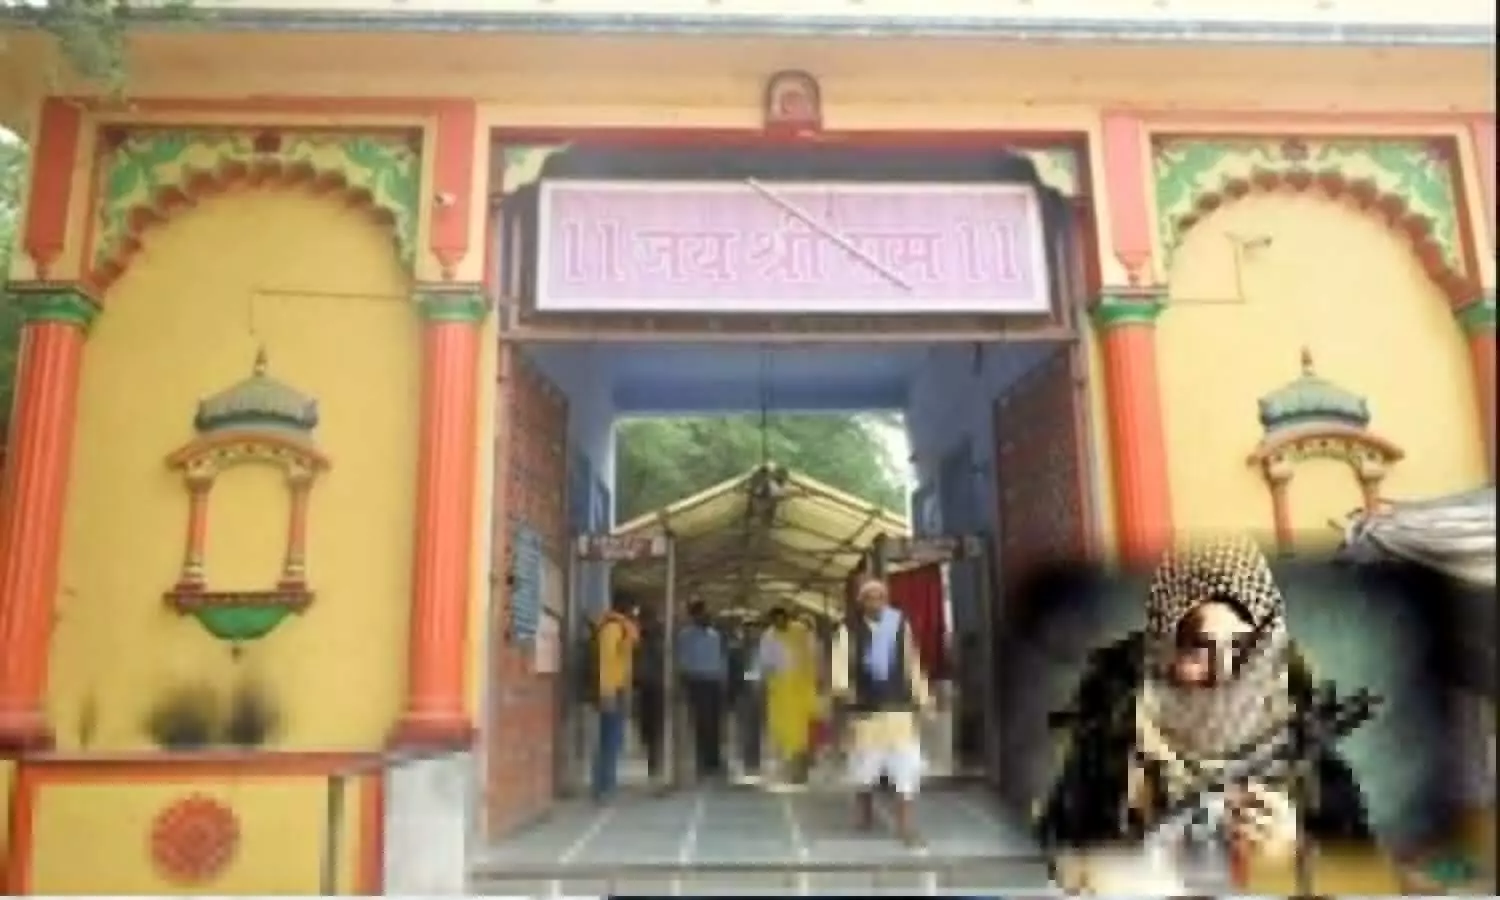 Terrorist threat to blow up Hanuman temple in Aliganj, capital by August 14